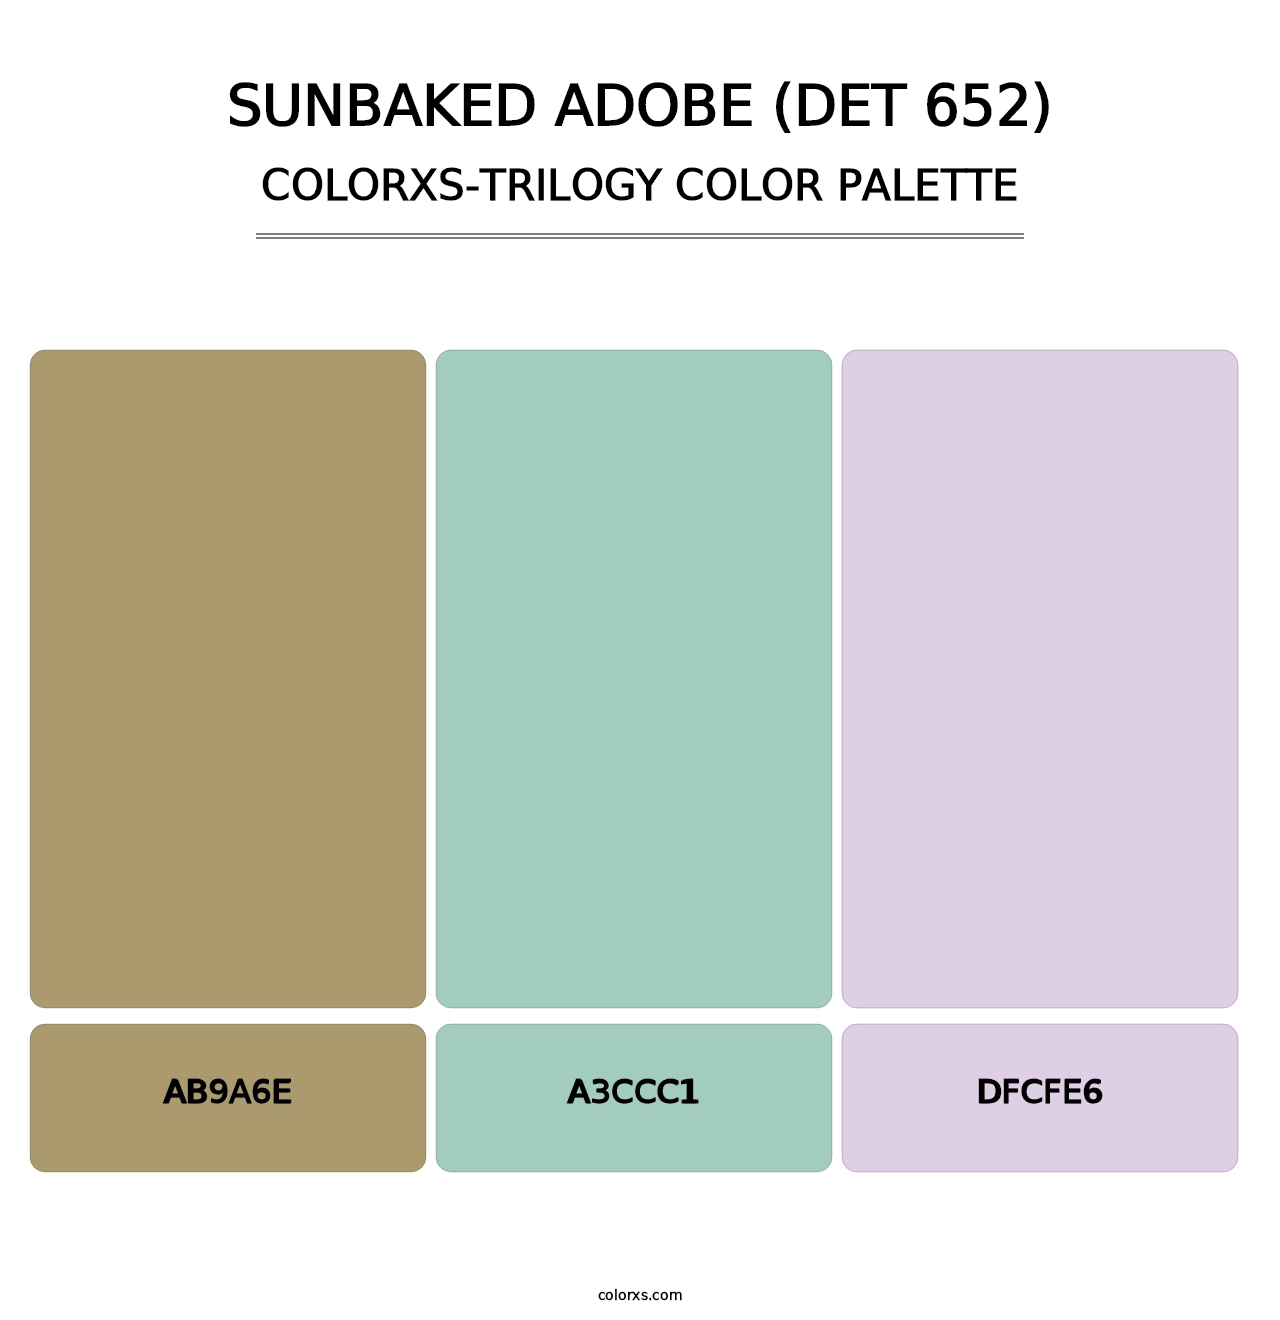 Sunbaked Adobe (DET 652) - Colorxs Trilogy Palette